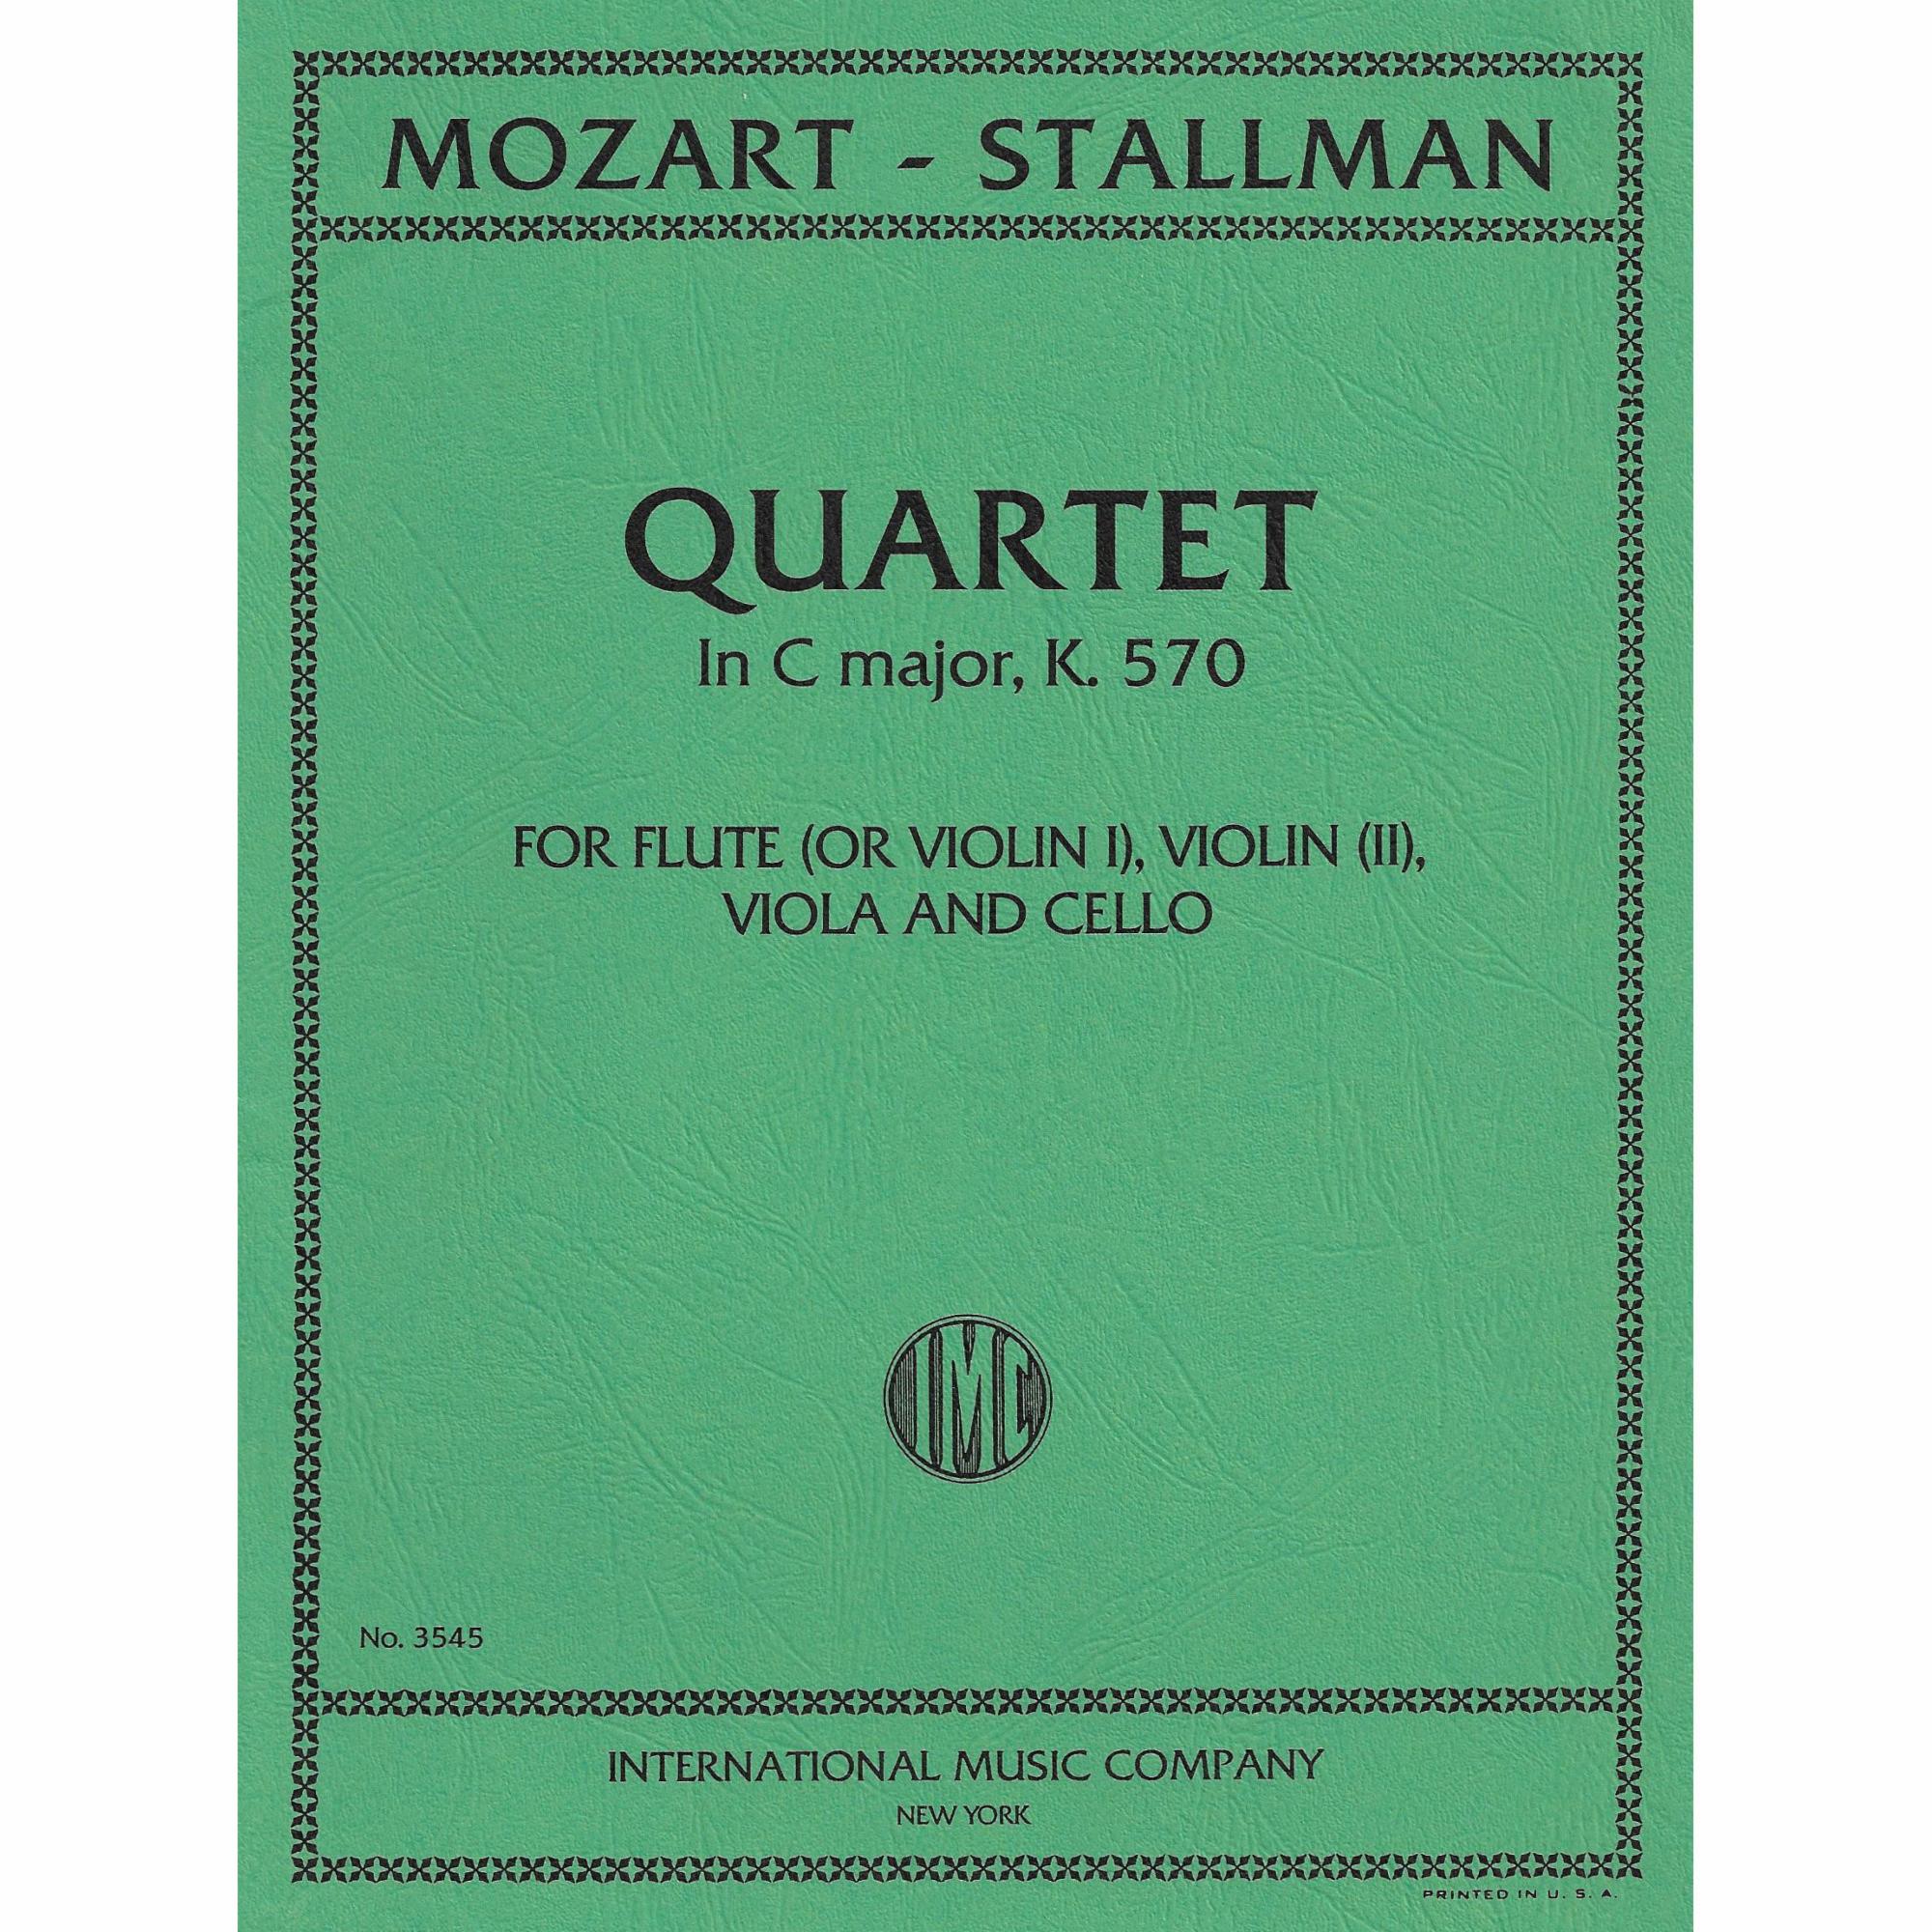 Mozart -- Piano Sonata No. 17 in B-flat Major, K. 570, arr. String Quartet